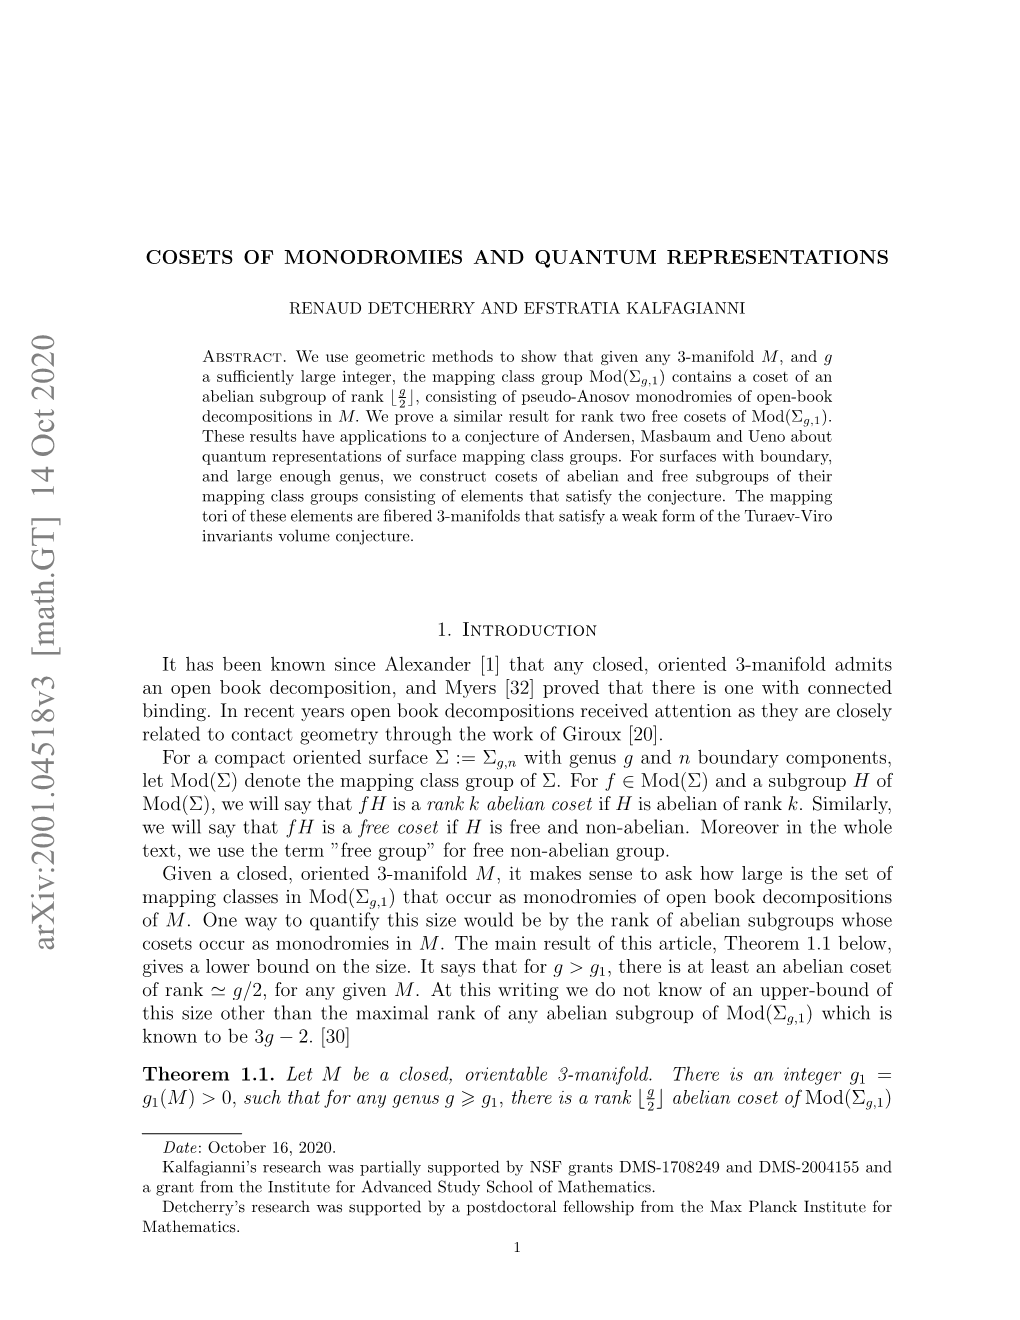 Cosets of Monodromies and Quantum Representations